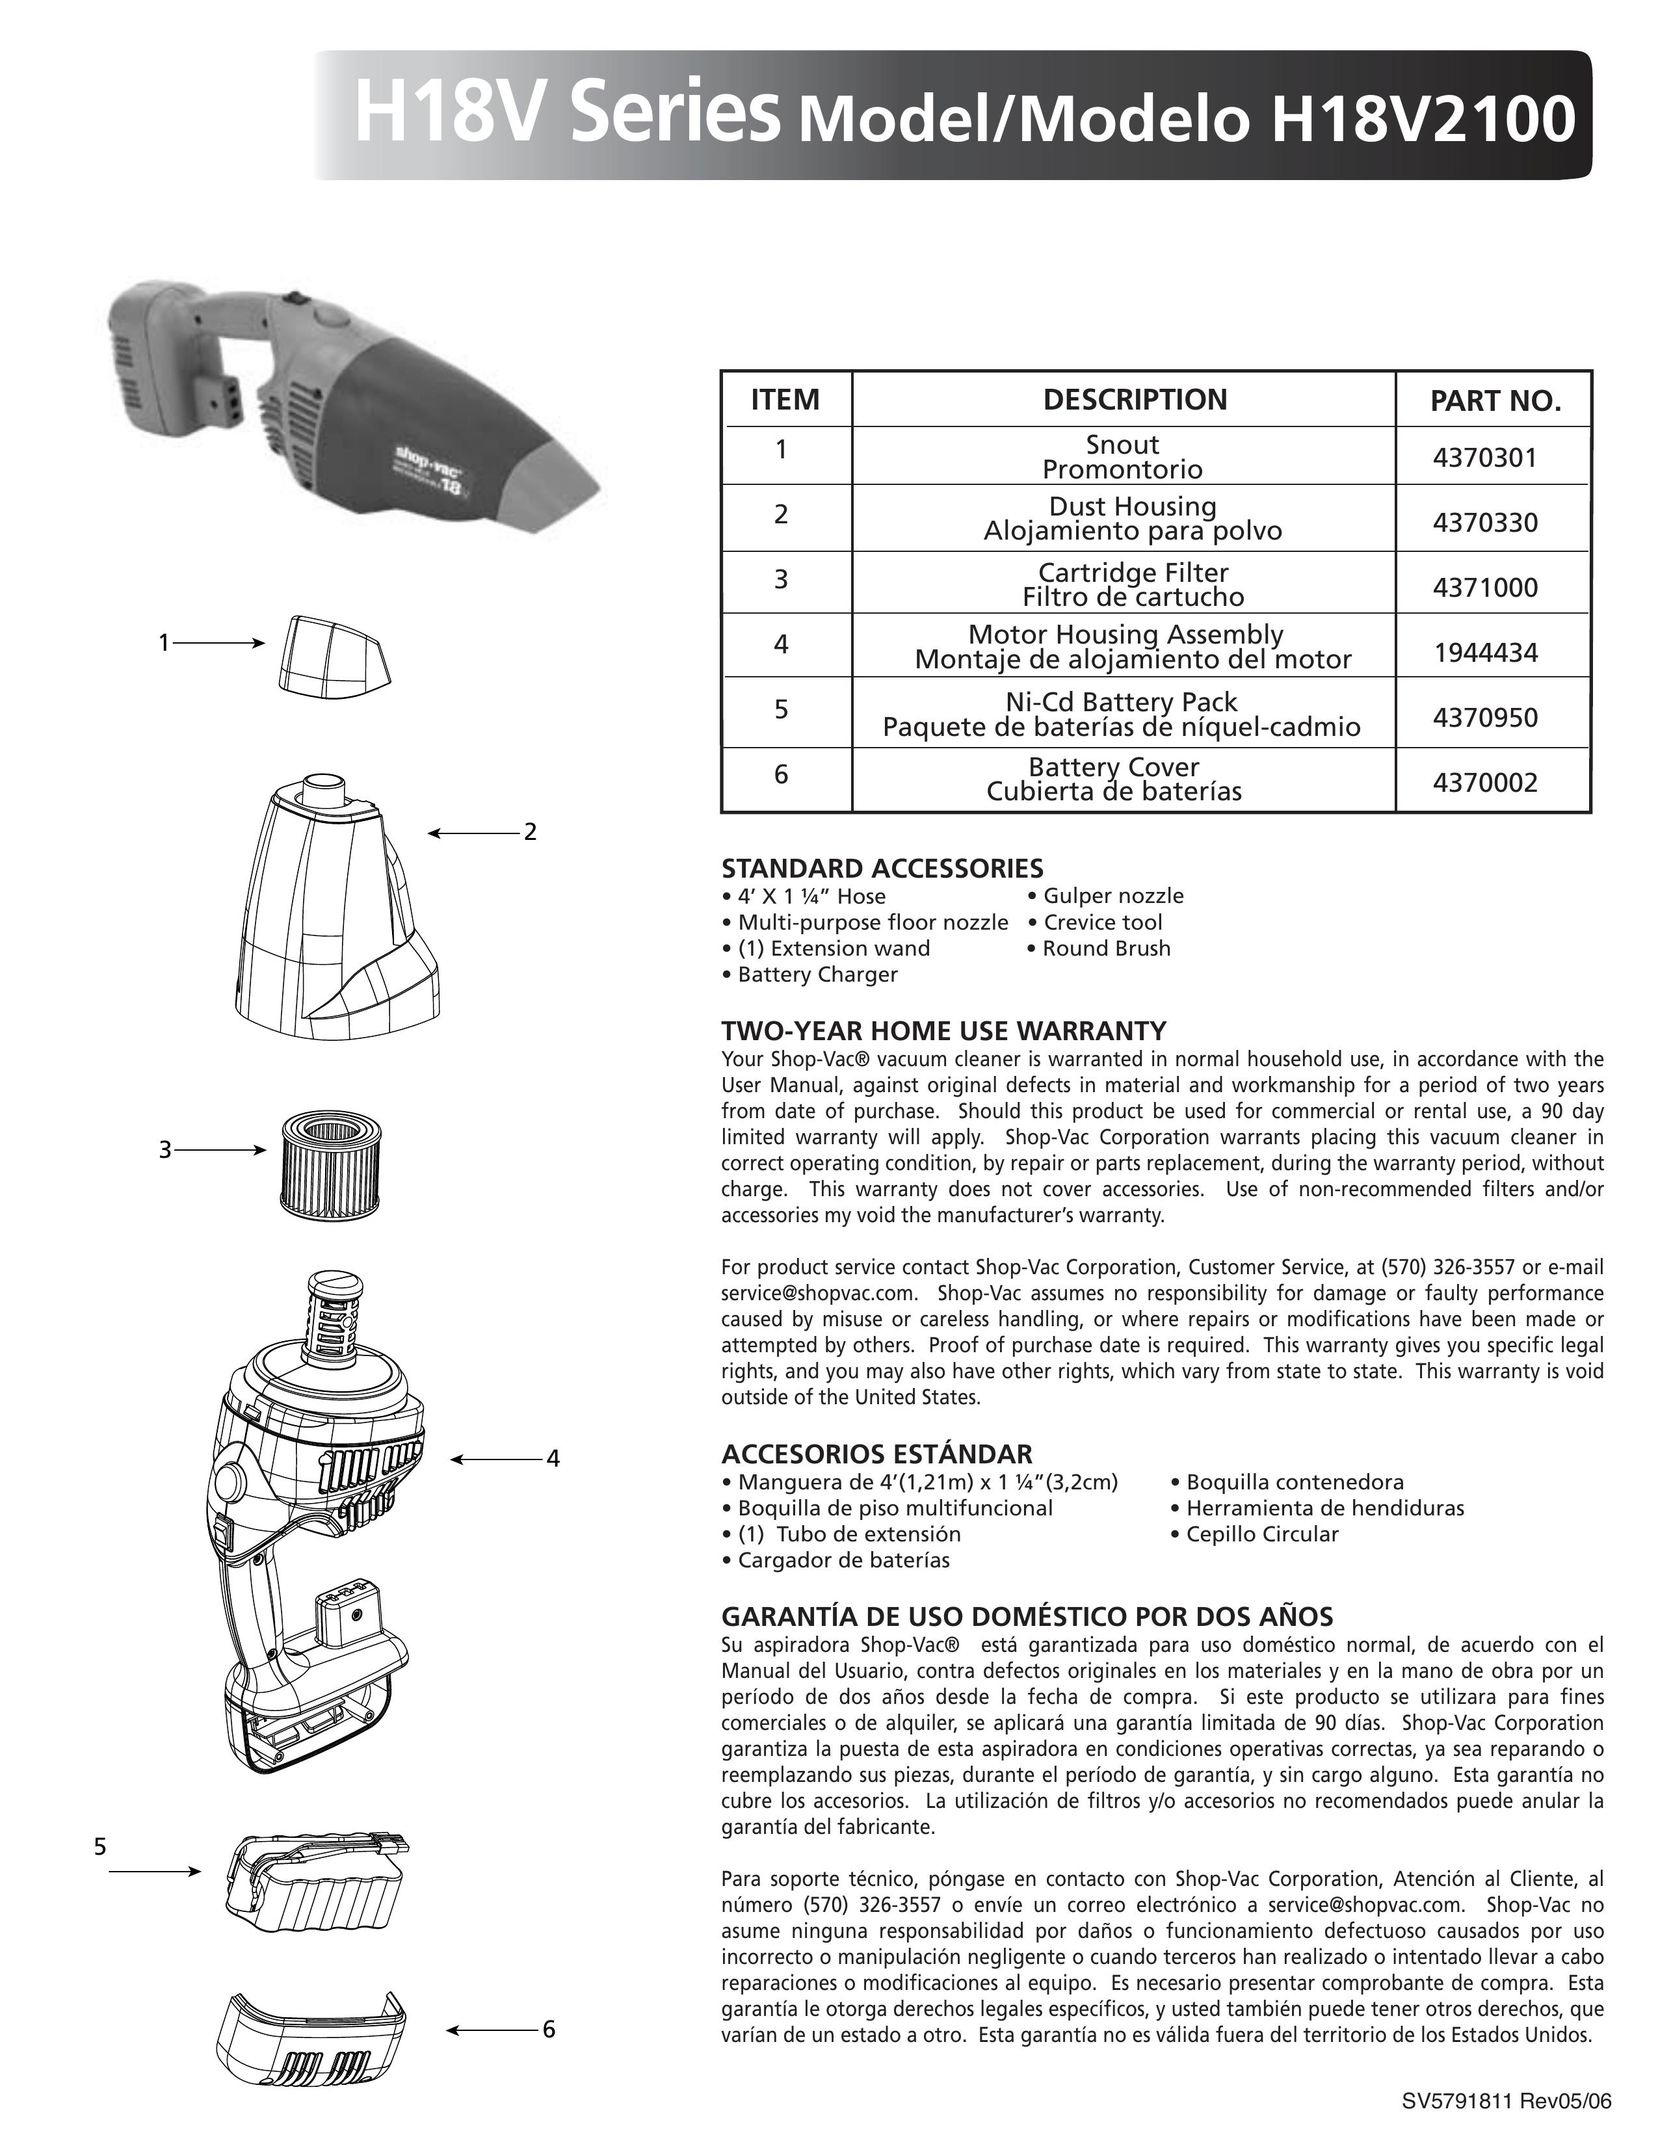 Shop-Vac H18V2100 Vacuum Cleaner User Manual